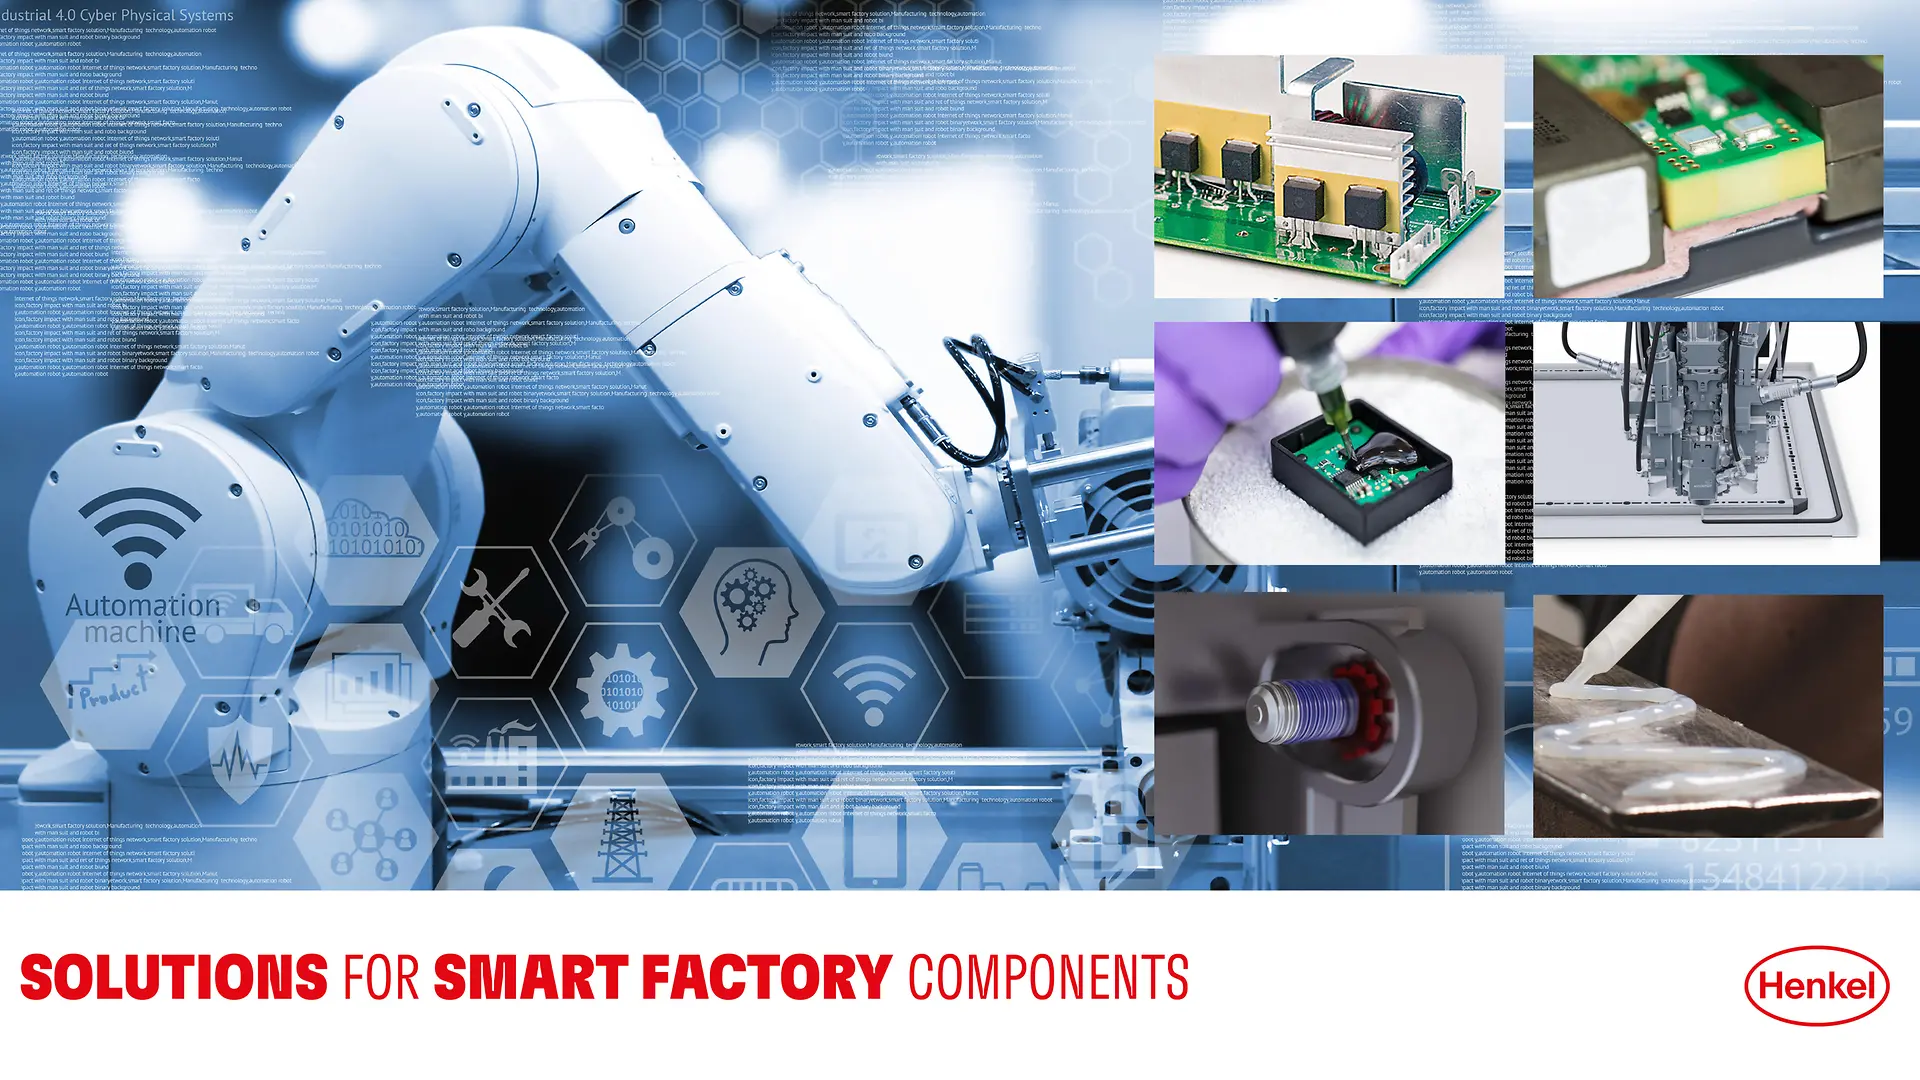 Henkel Solutions for Smart Factory Components